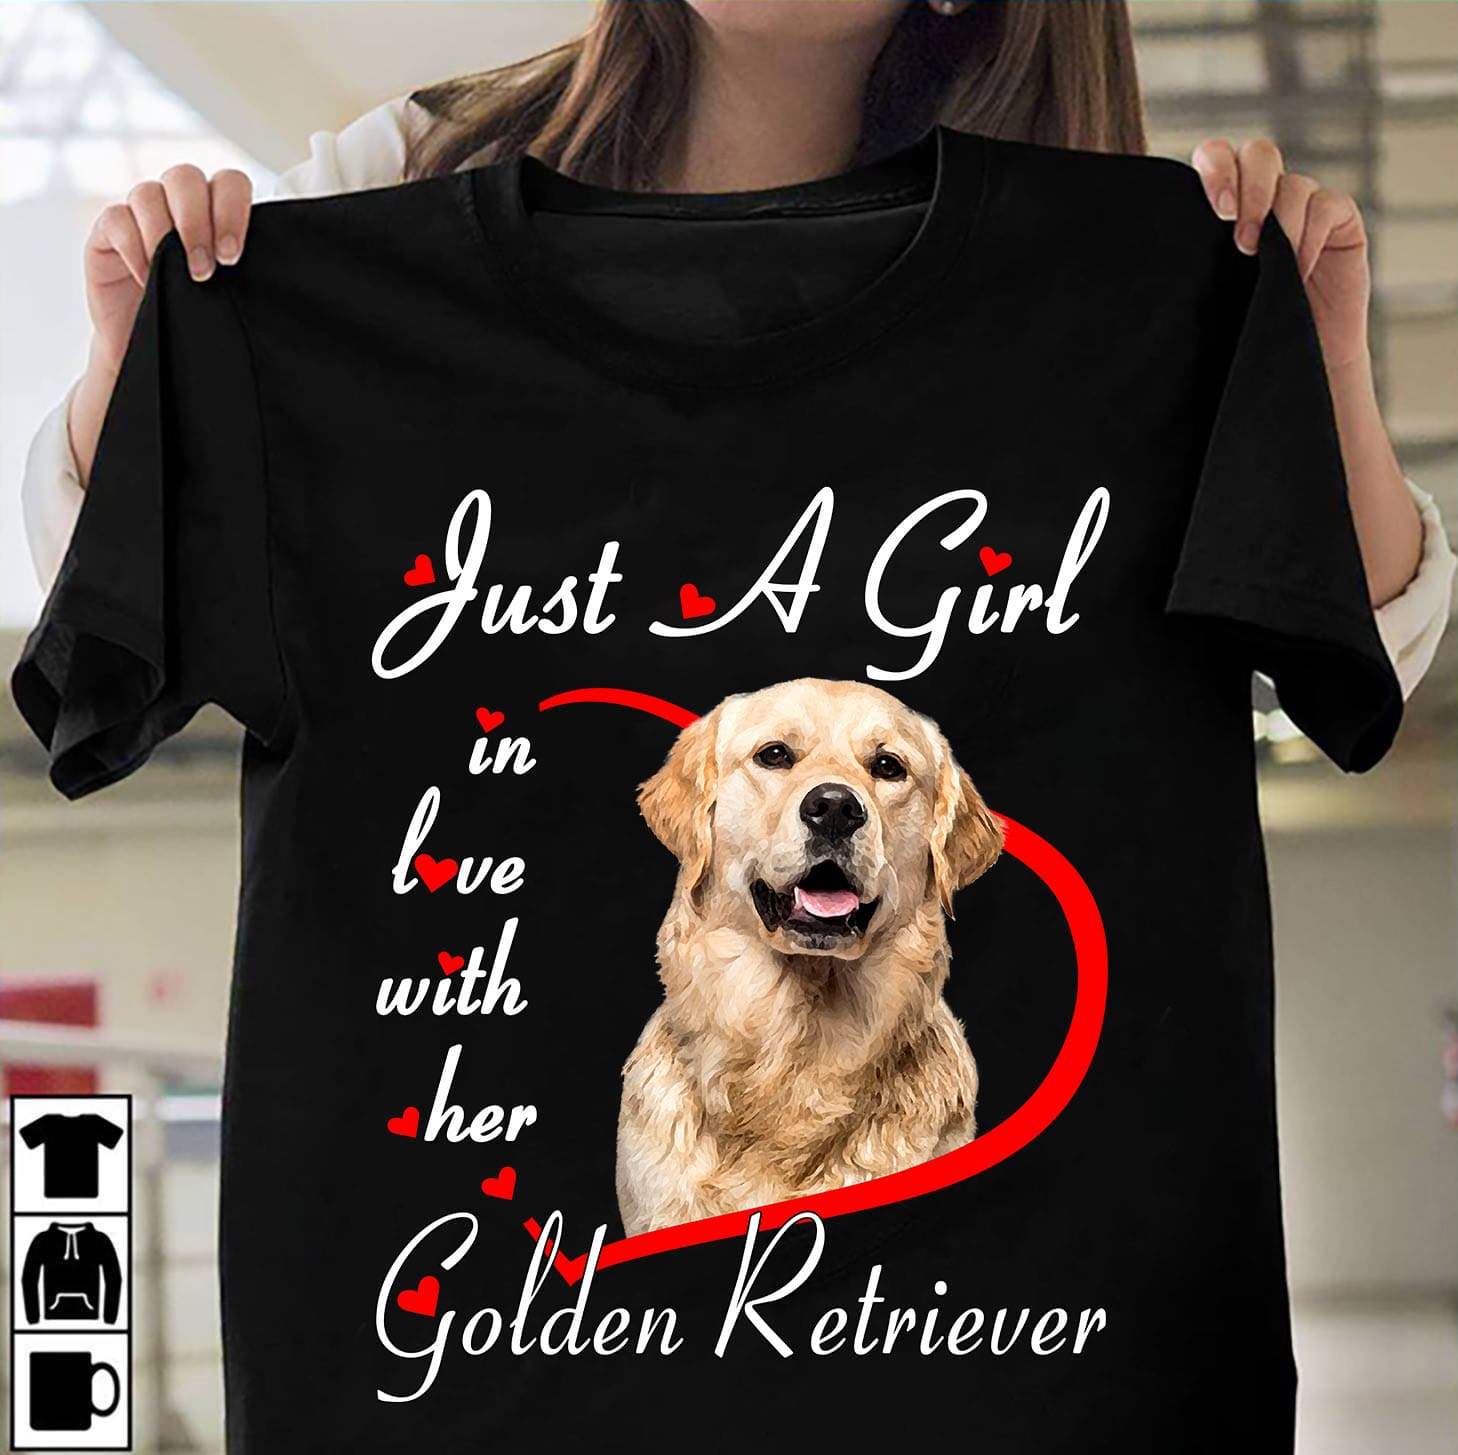 Just a girl in love with her Golden retriever - Girl loves Golden, girls who love dogs